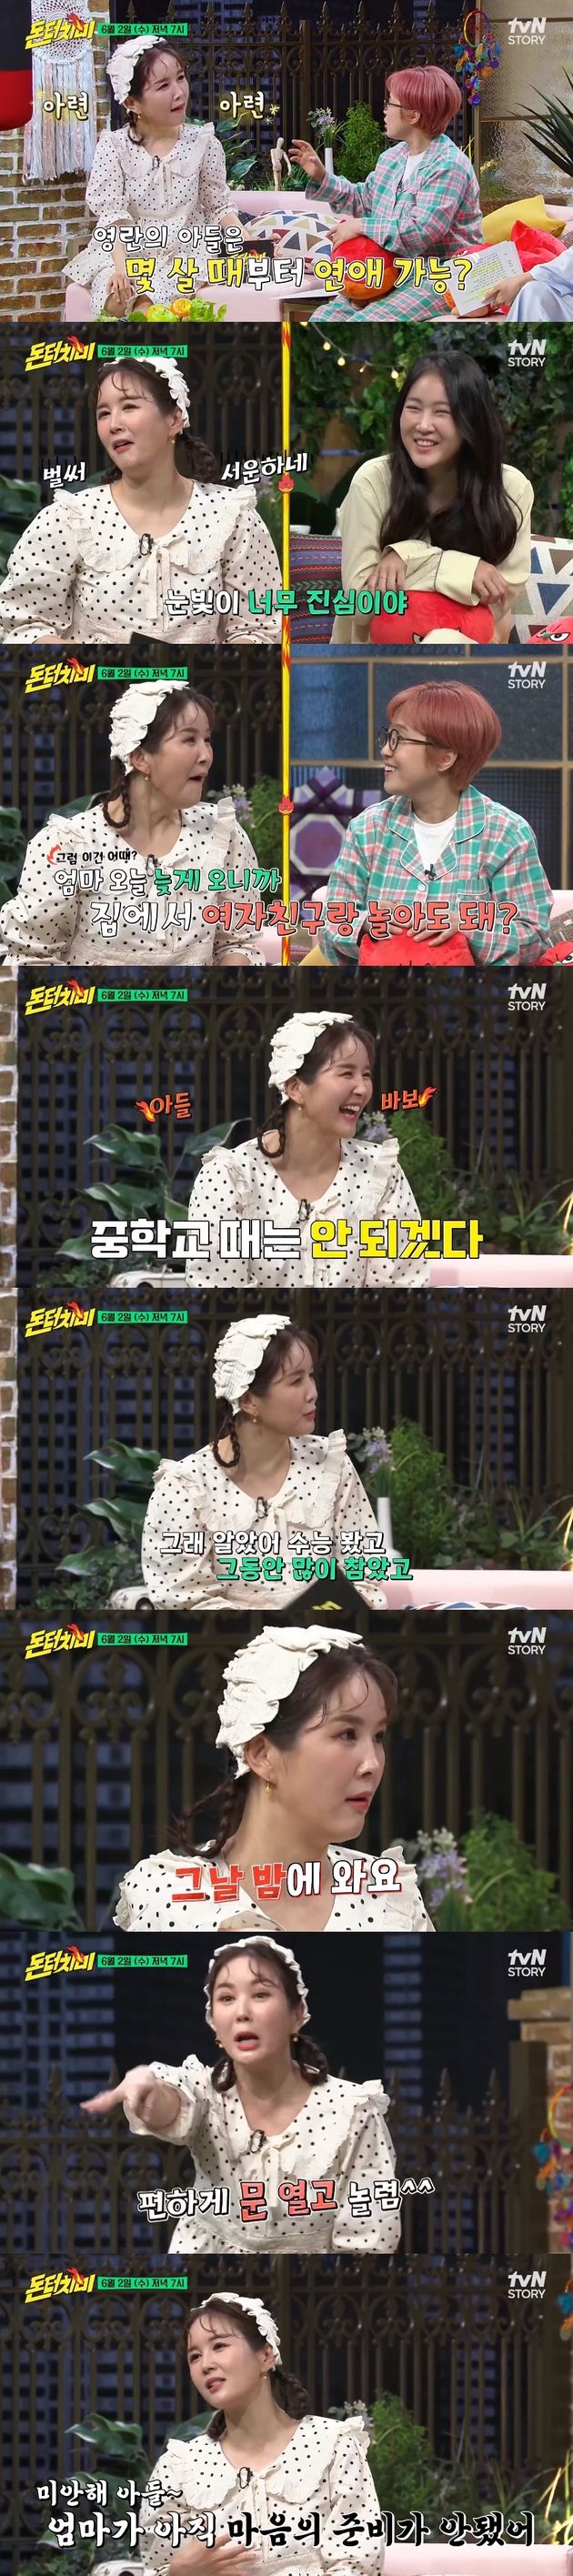 tvN STORY 프로그램 ‘돈 터치 미